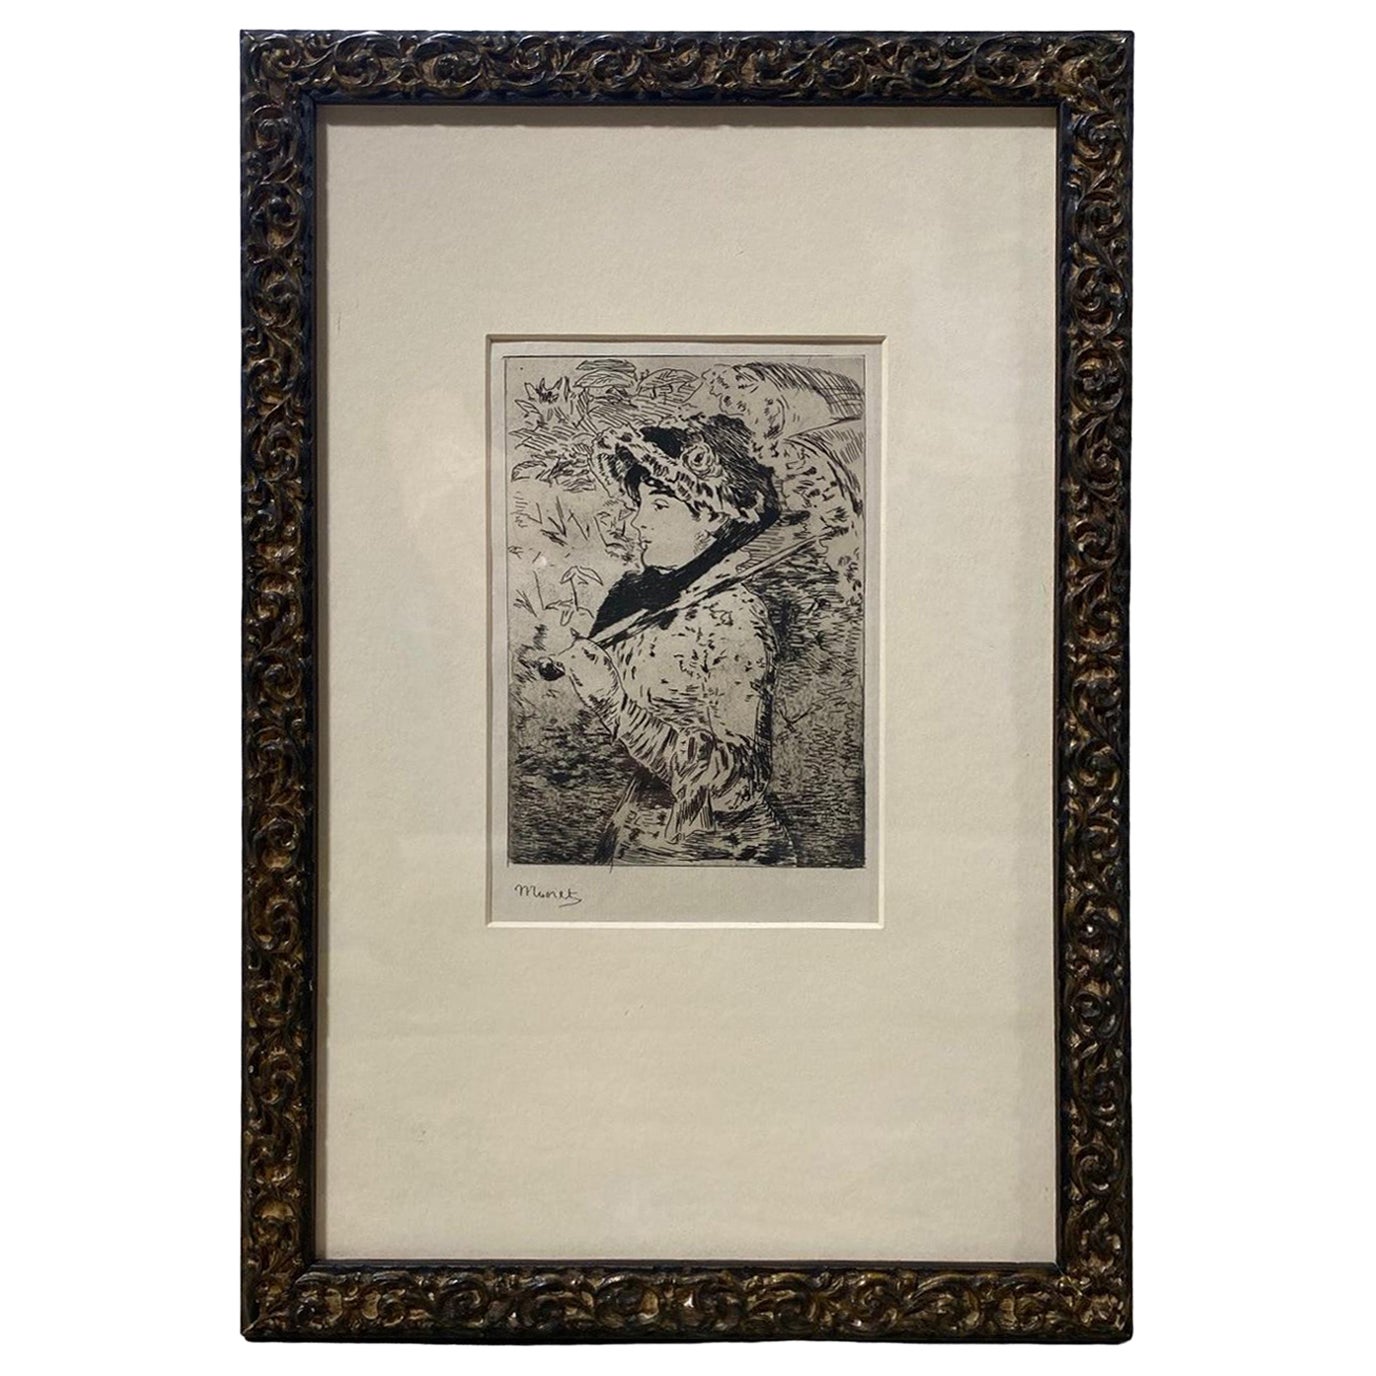 Édouard Manet Signed Impressionist Aquatint Etching Jeanne 'Spring', 1882 For Sale